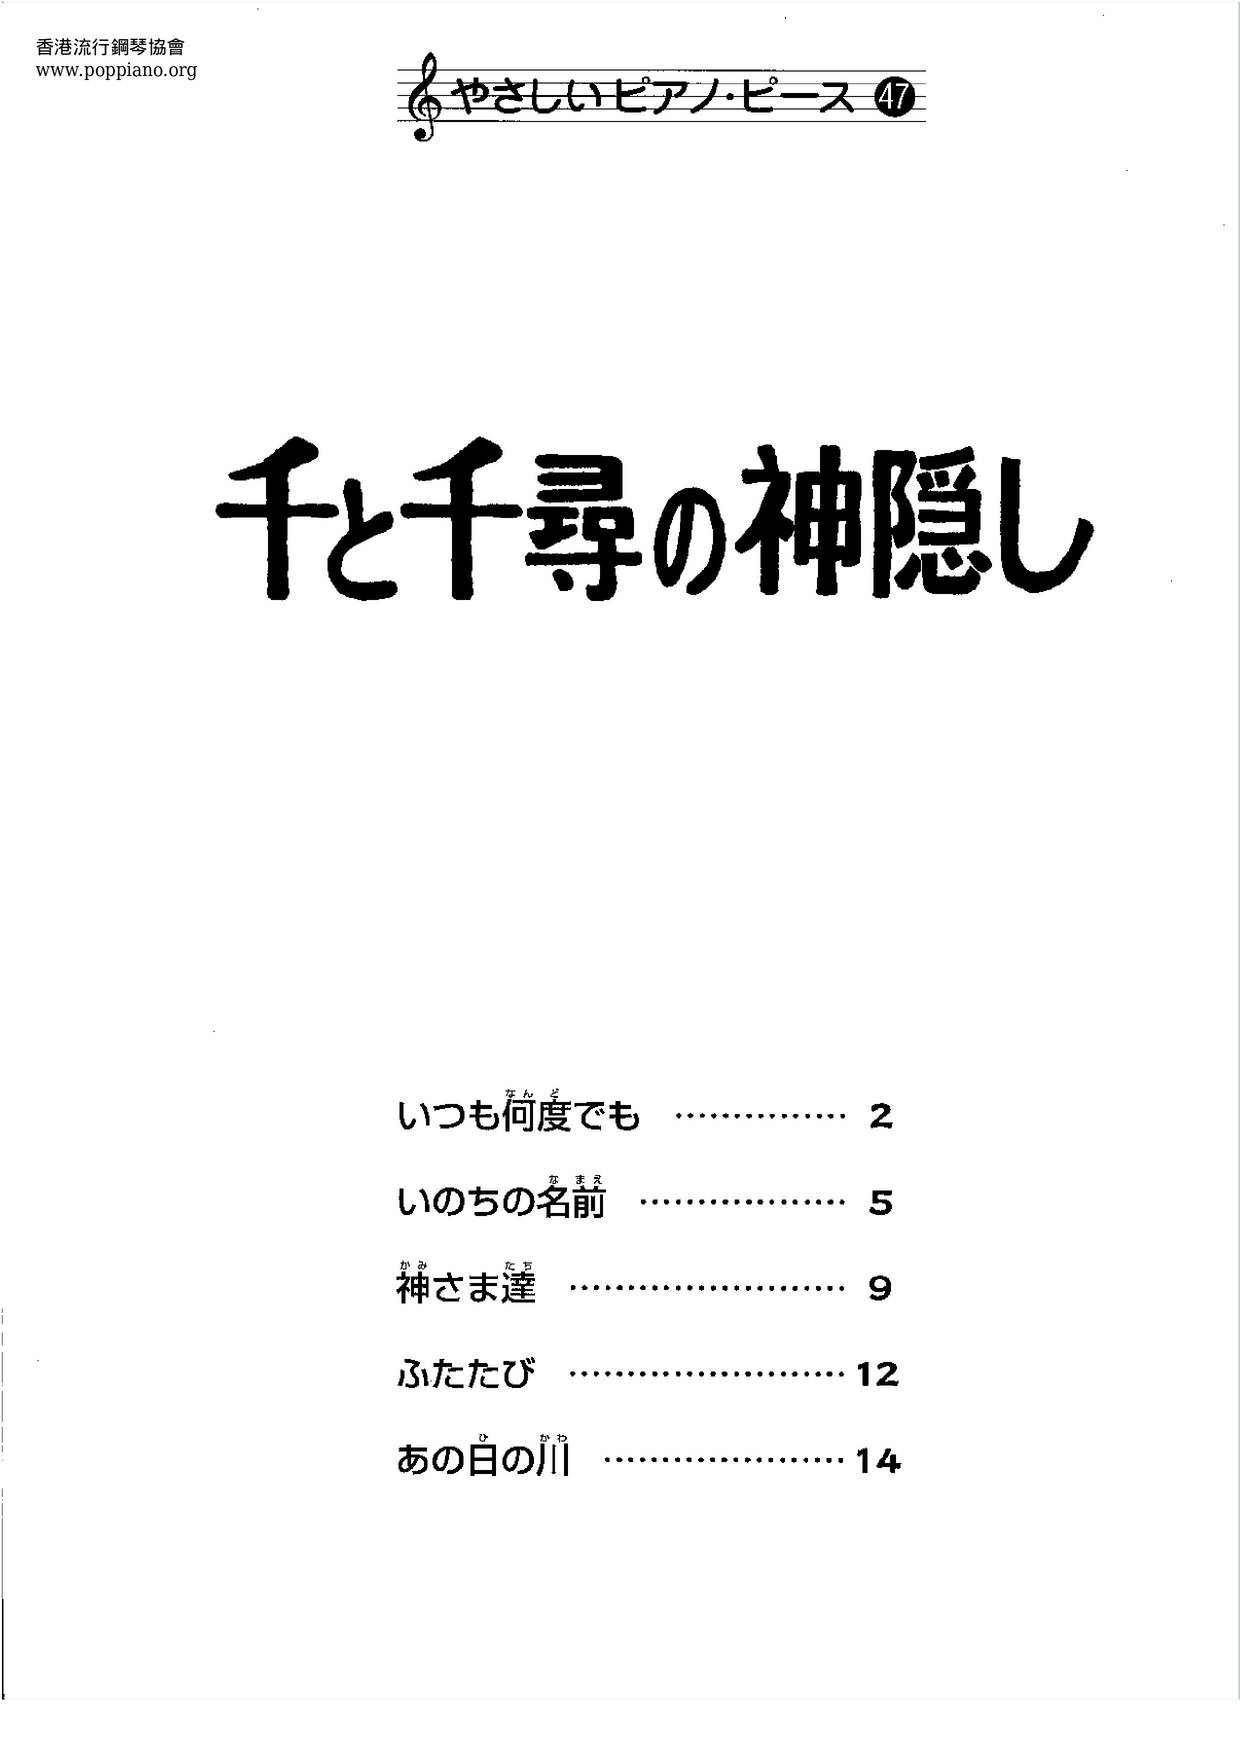 千與千尋 book 18 pages Score